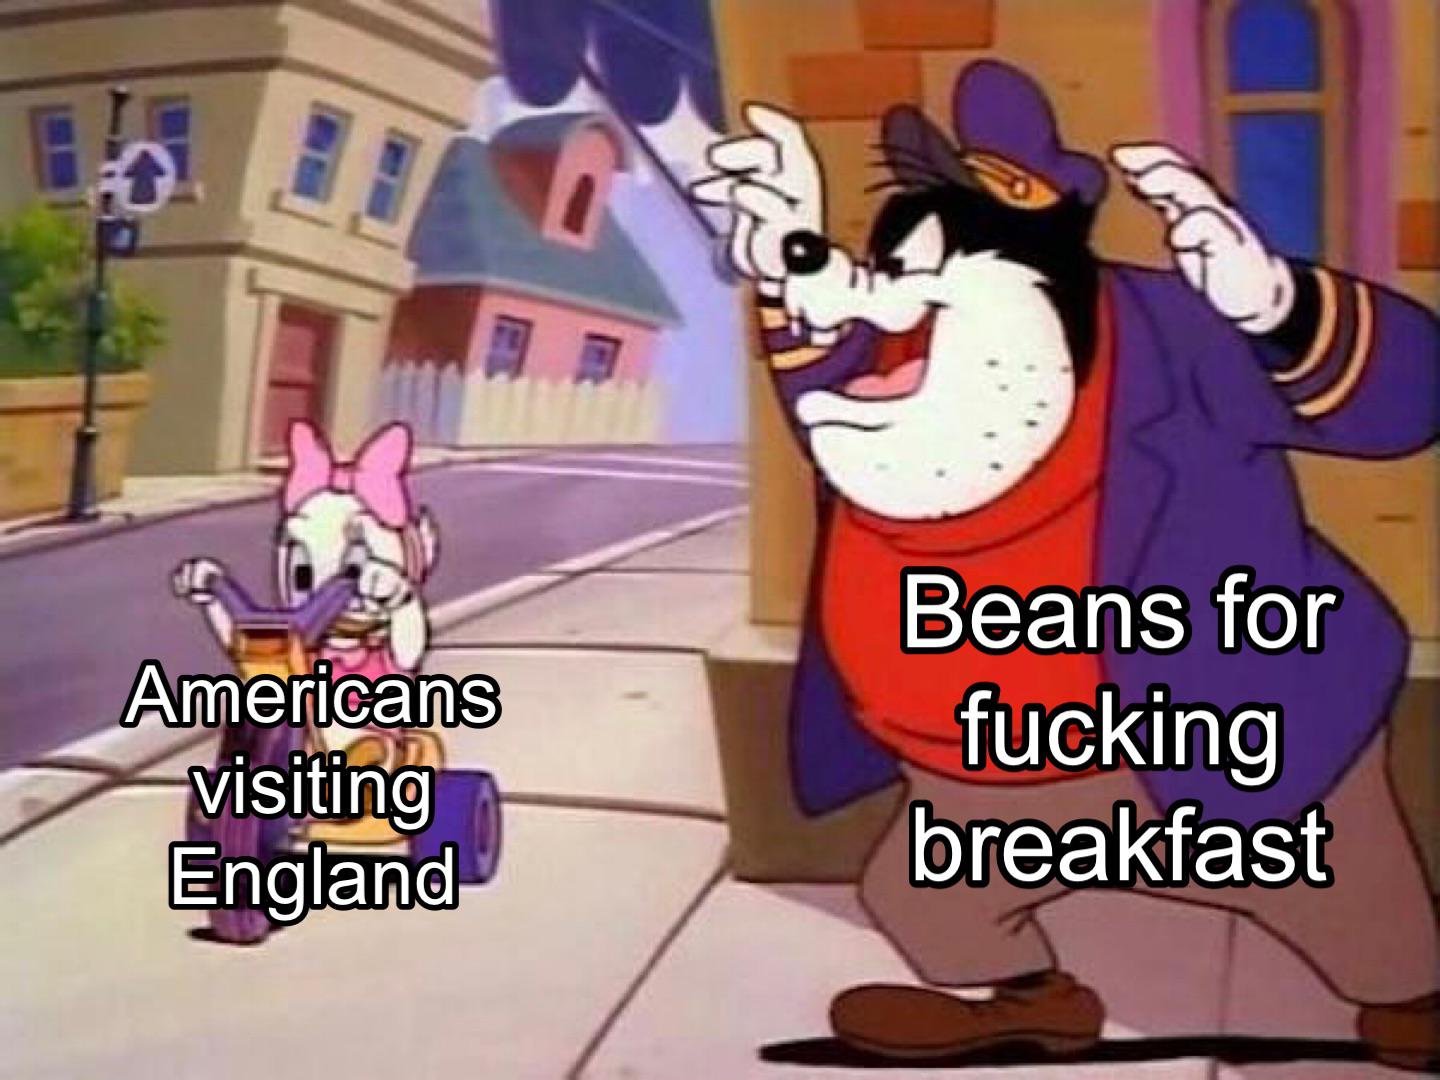 Internet meme - Americans visiting England Beans for fucking breakfast